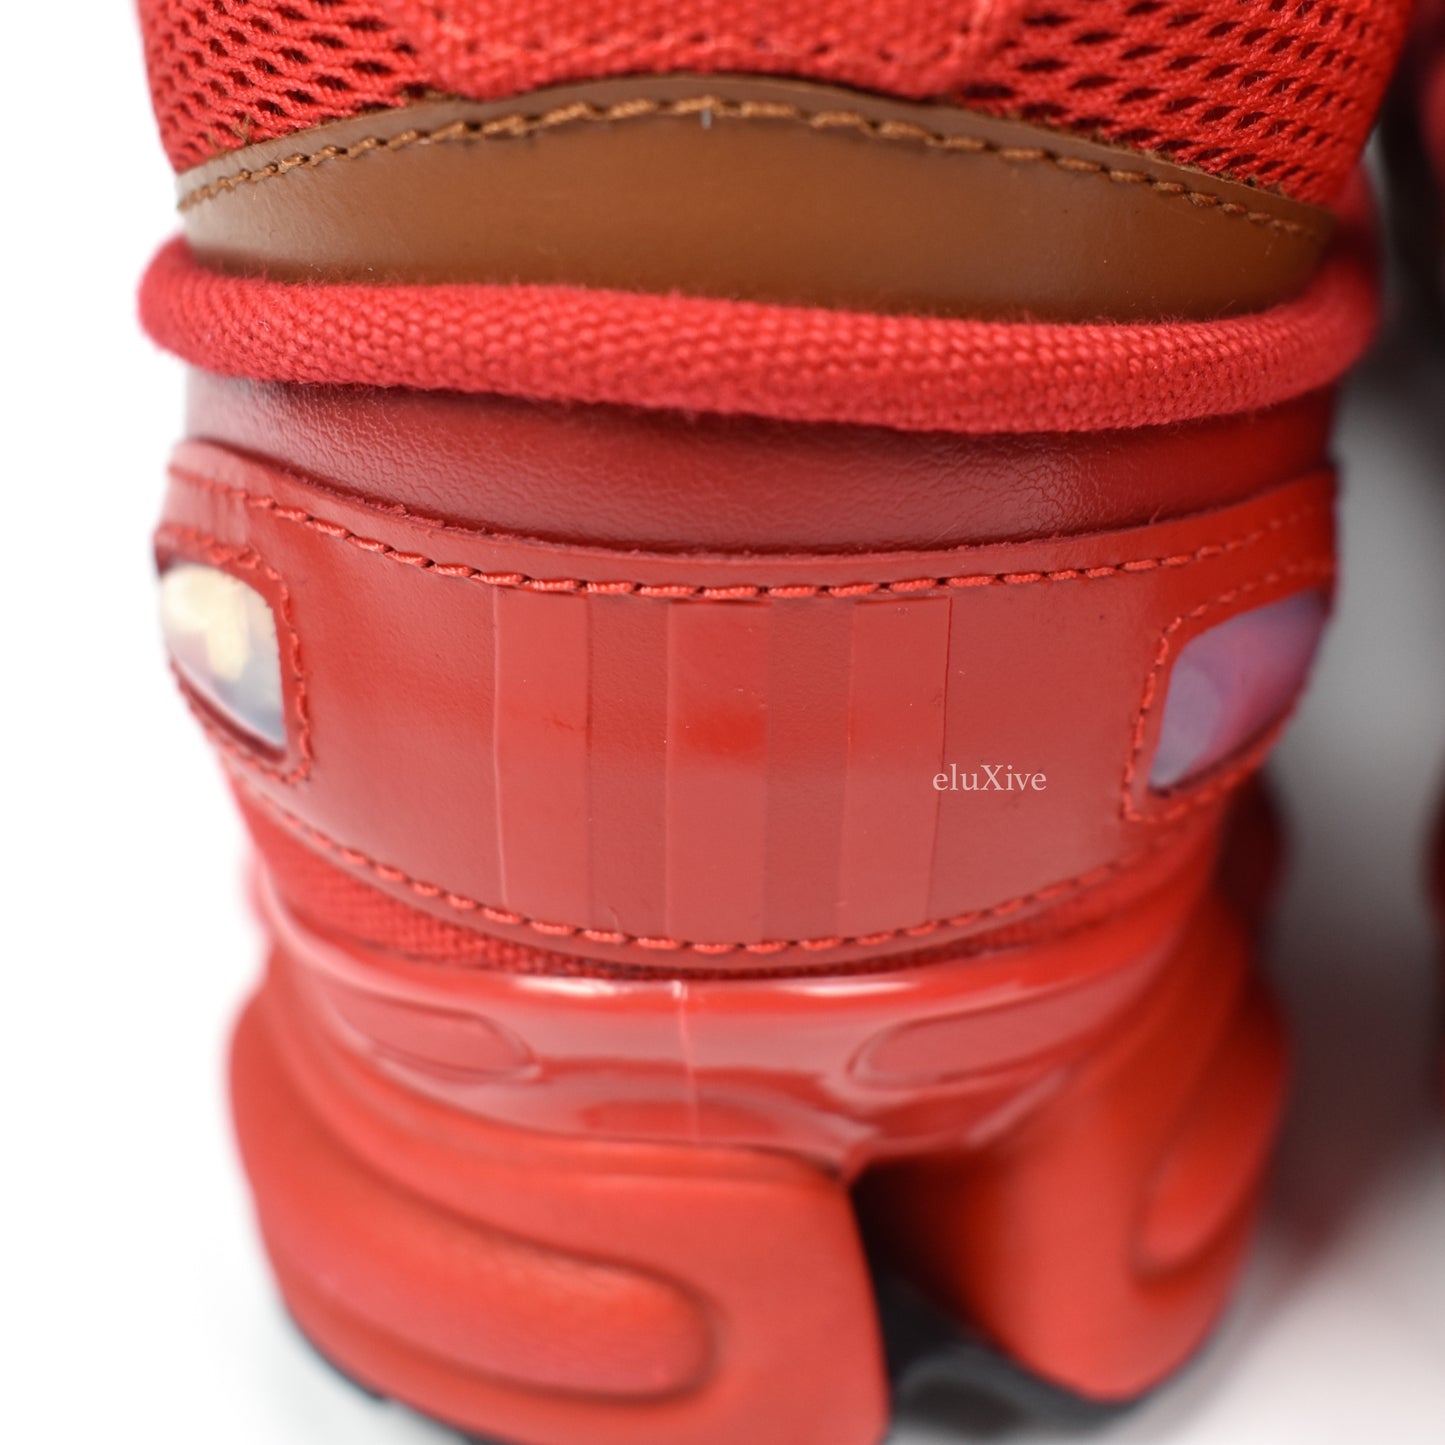 Adidas x Raf Simons - RS Ozweego 'Replicant' (Red)